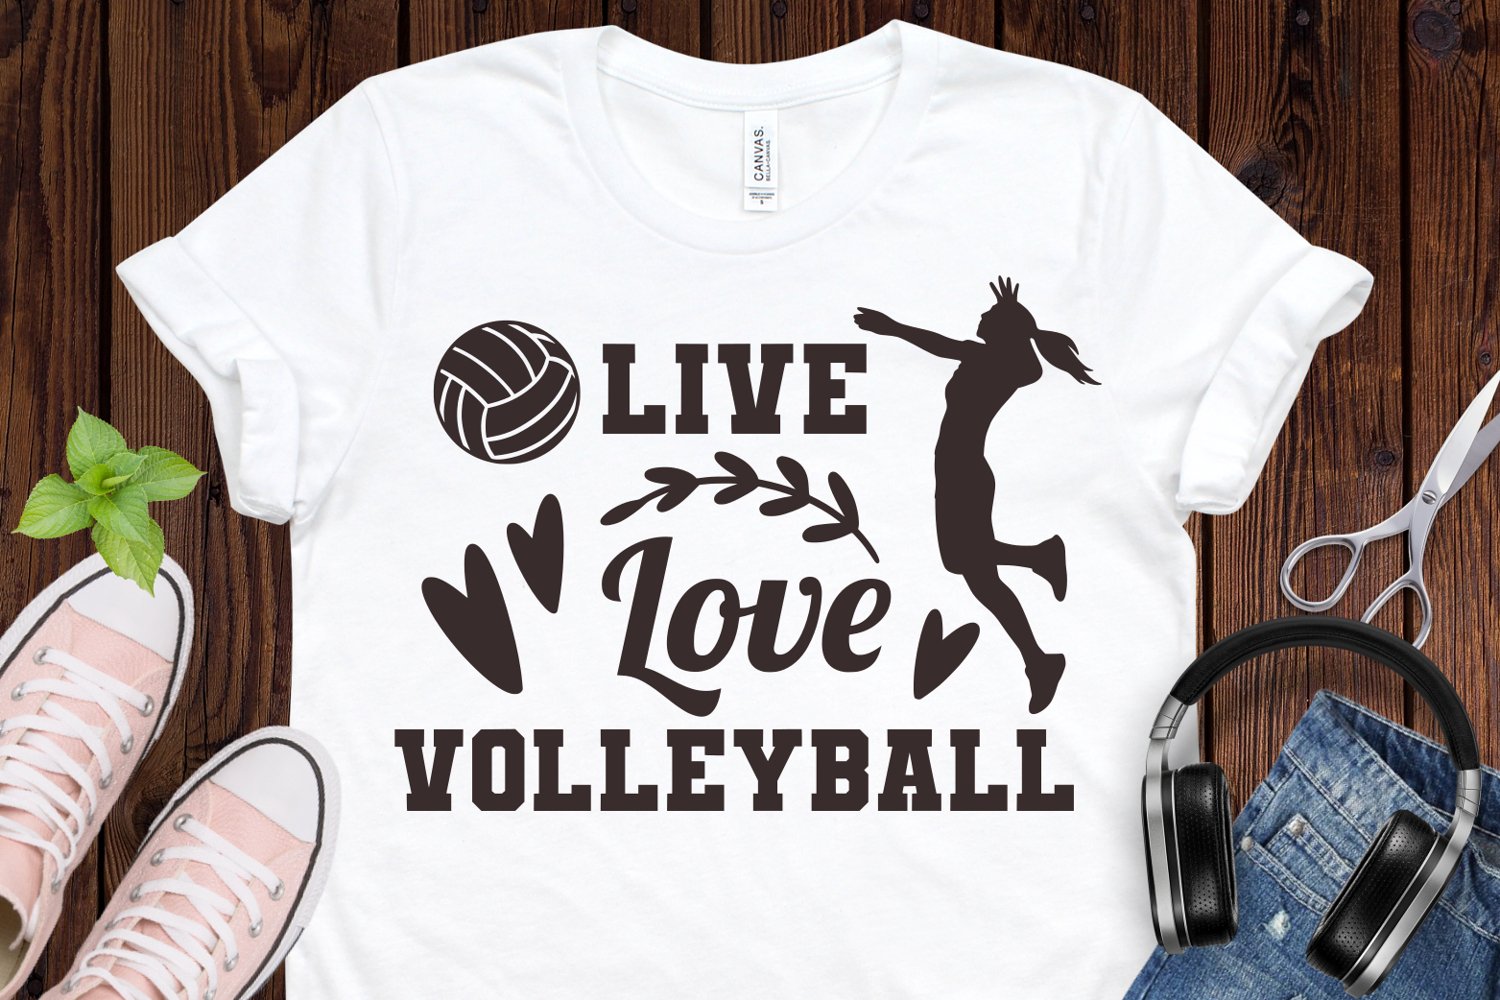 Live - love volleyball - t-shirt design.